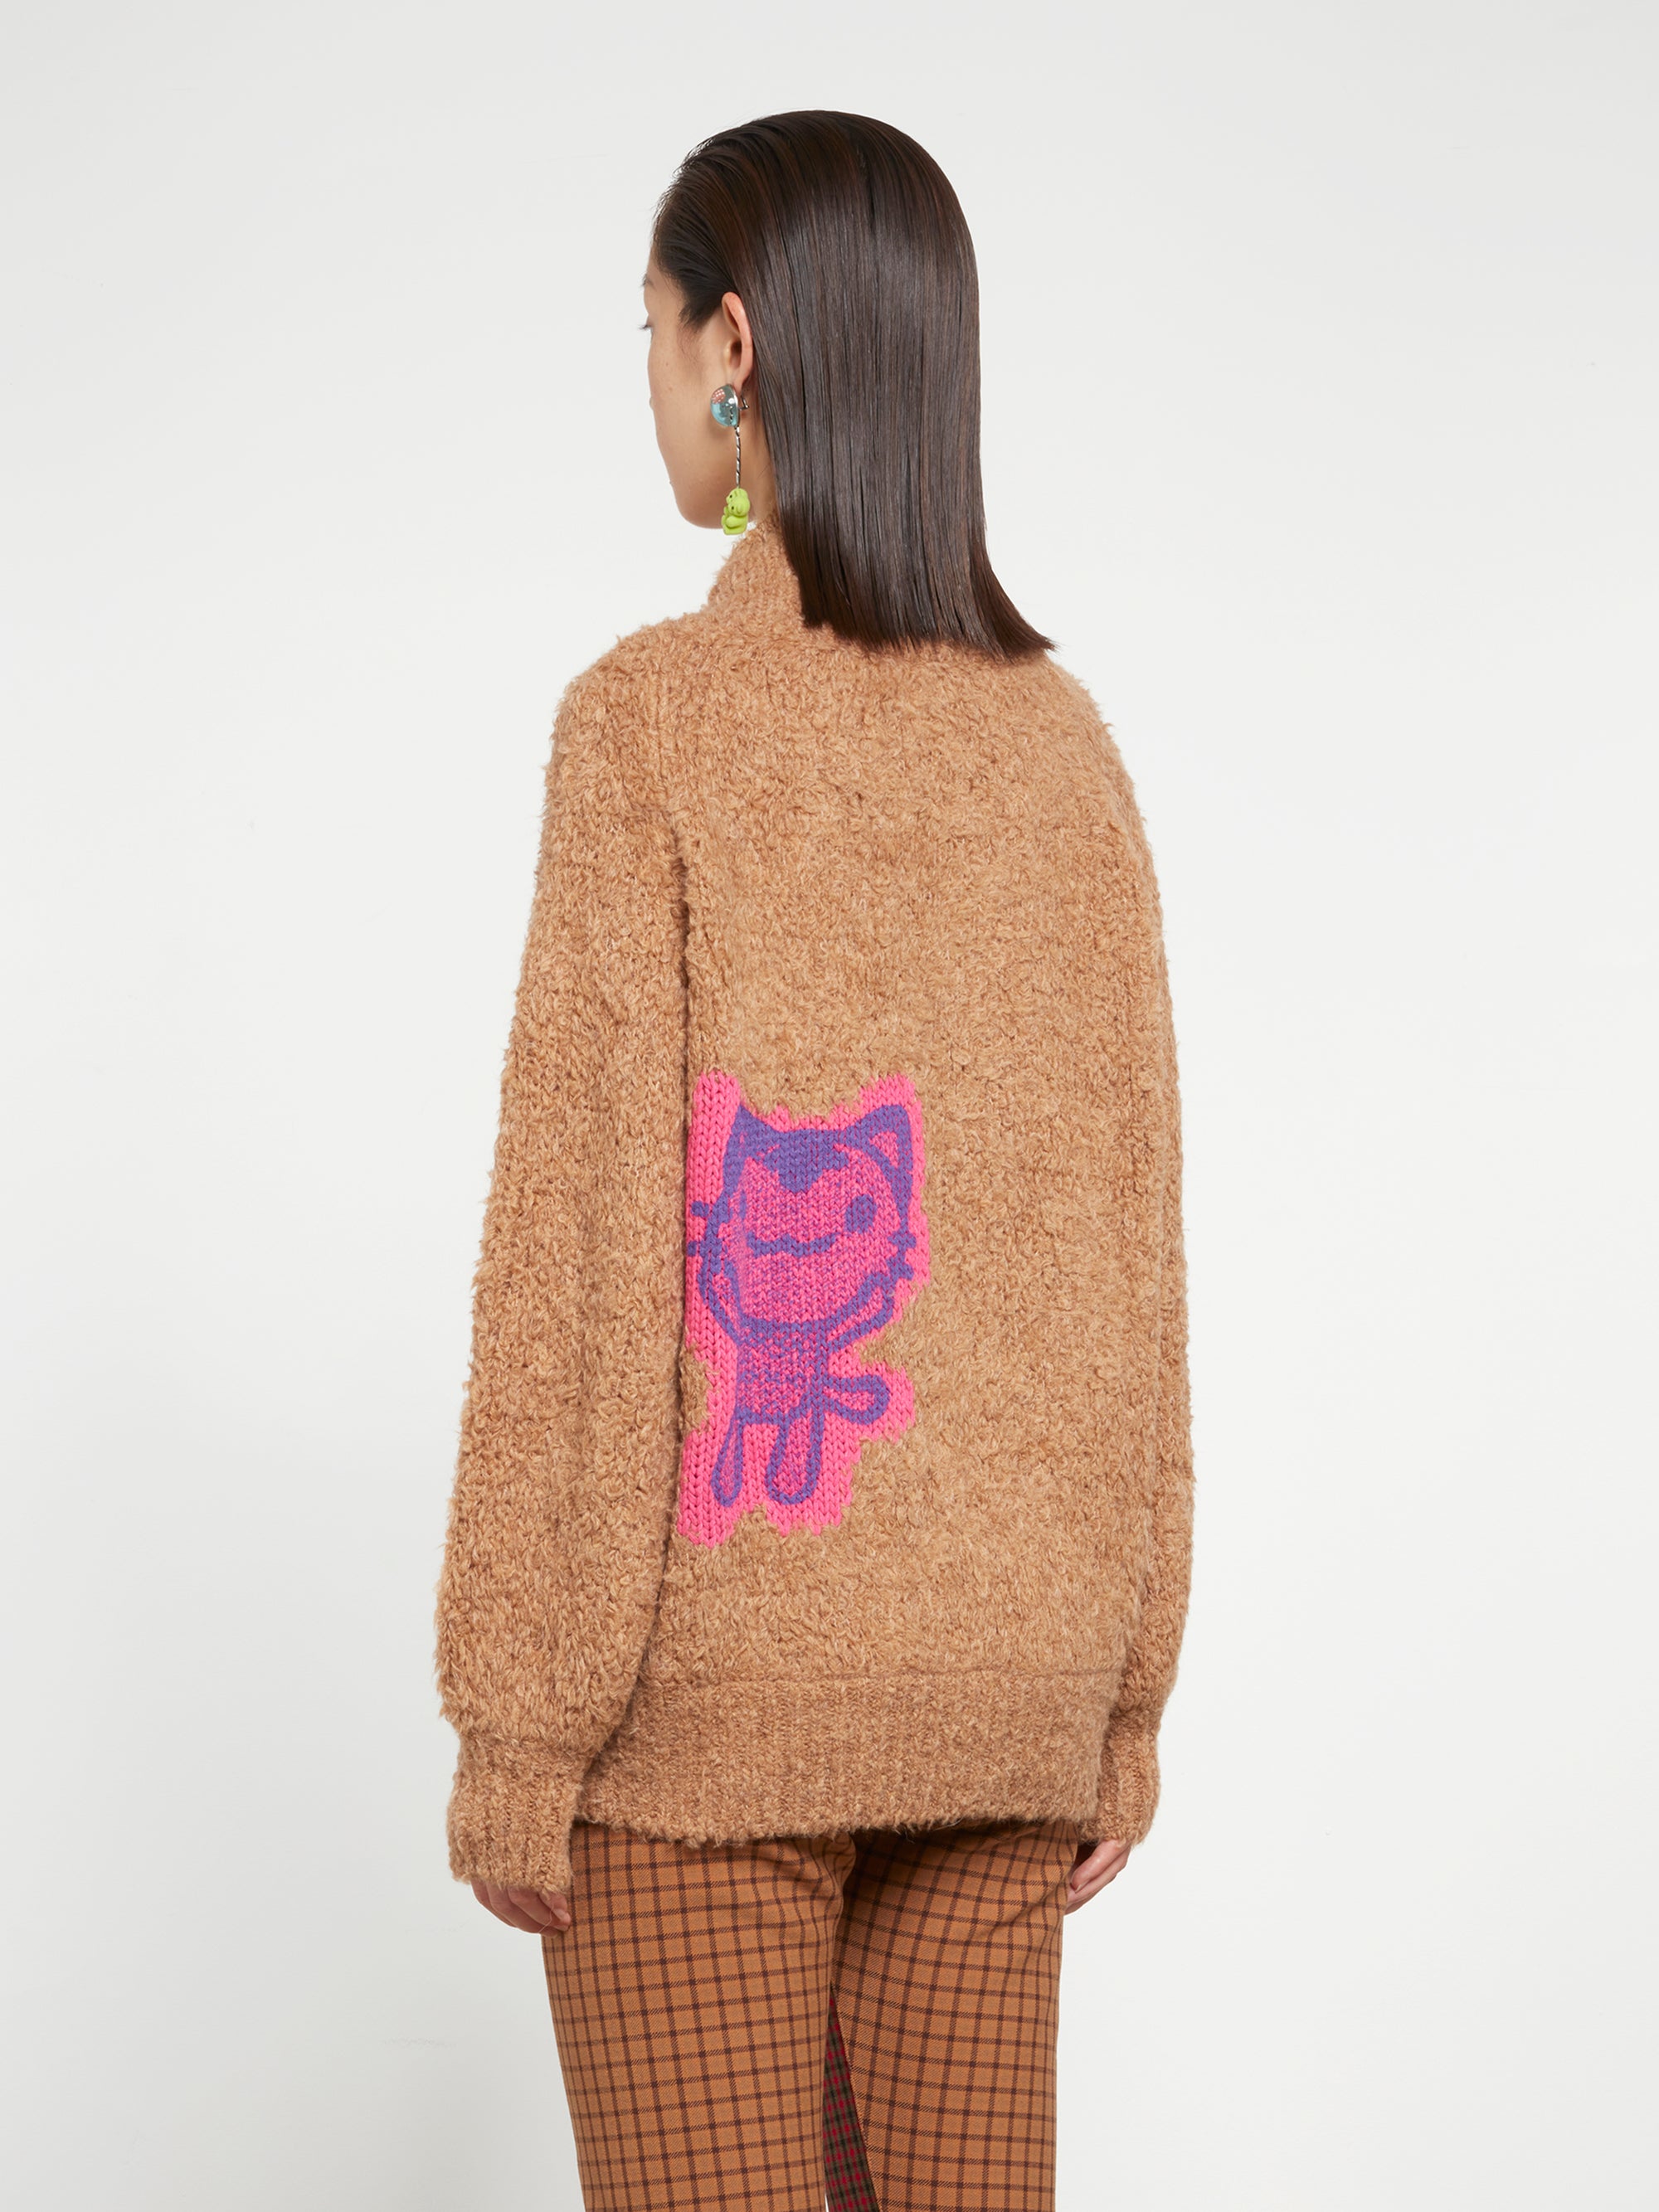 Heaven by Marc Jacobs - Kiko Kostadinov Women’s Patches Sweater - (Camel Multi)